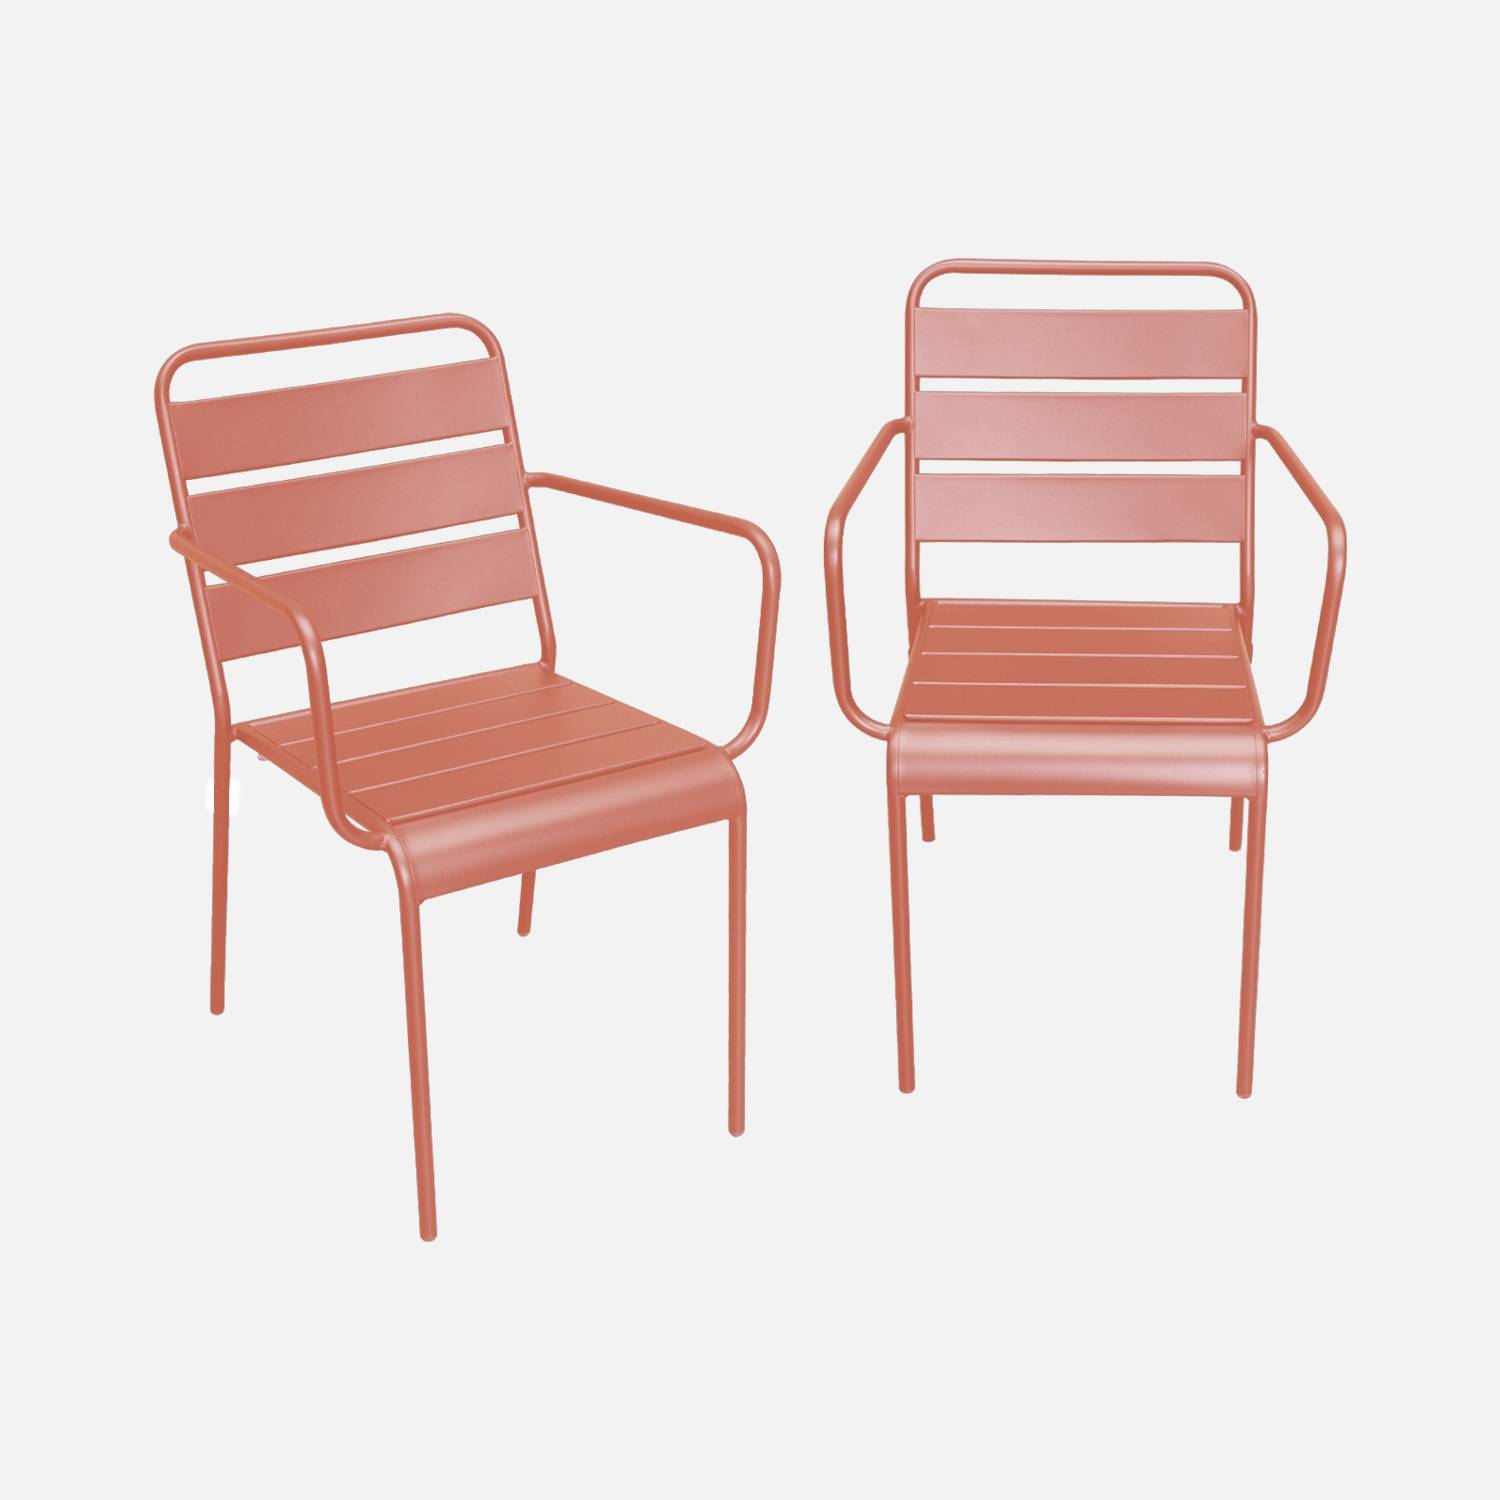 2er Set stapelbare Sessel aus Metall in lachsrosa l sweeek